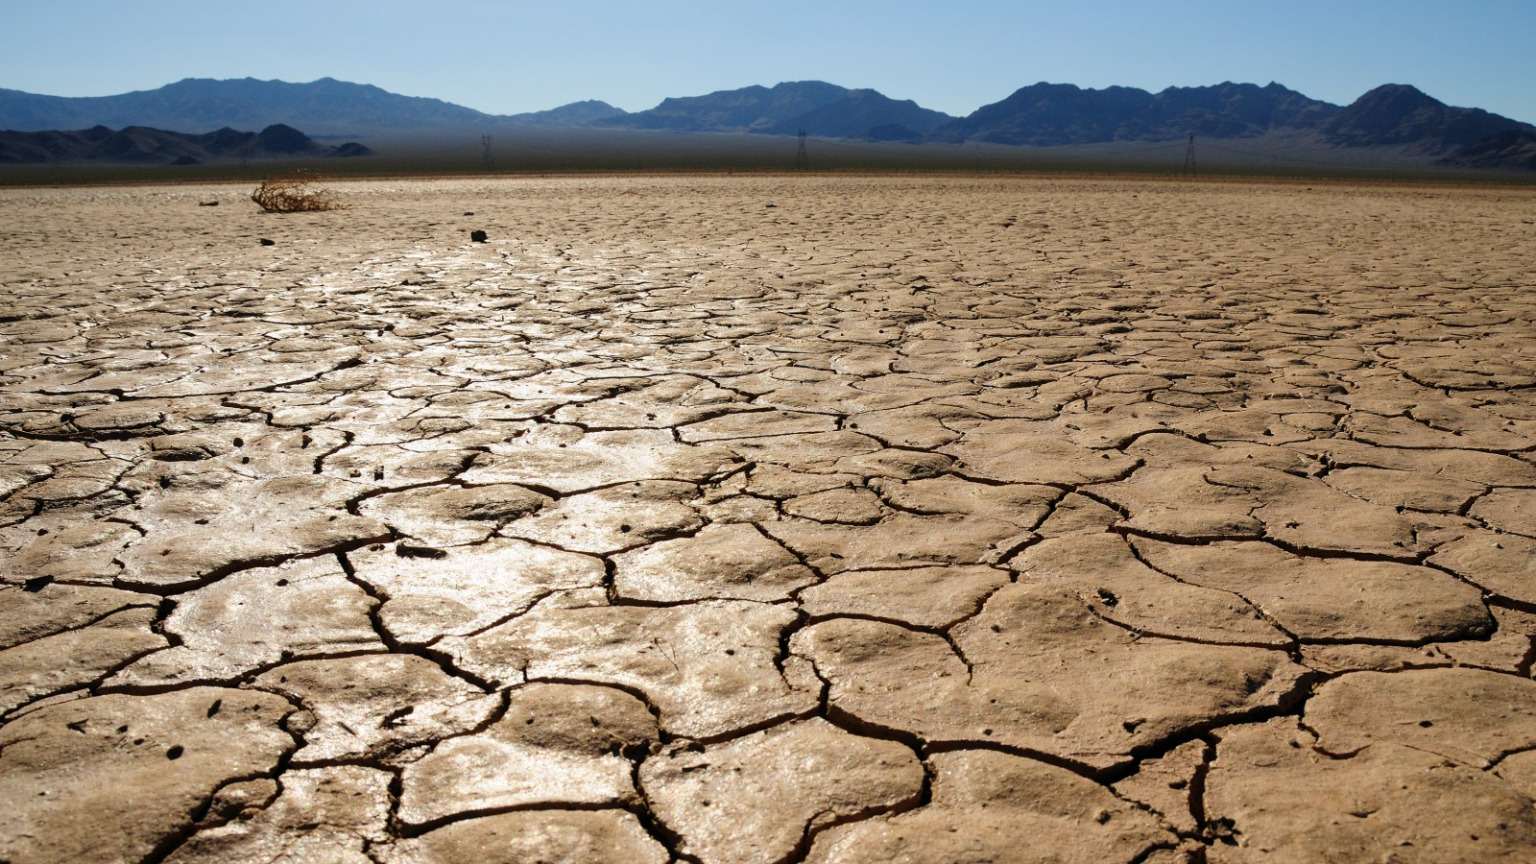 Seemorerocks: Global drought